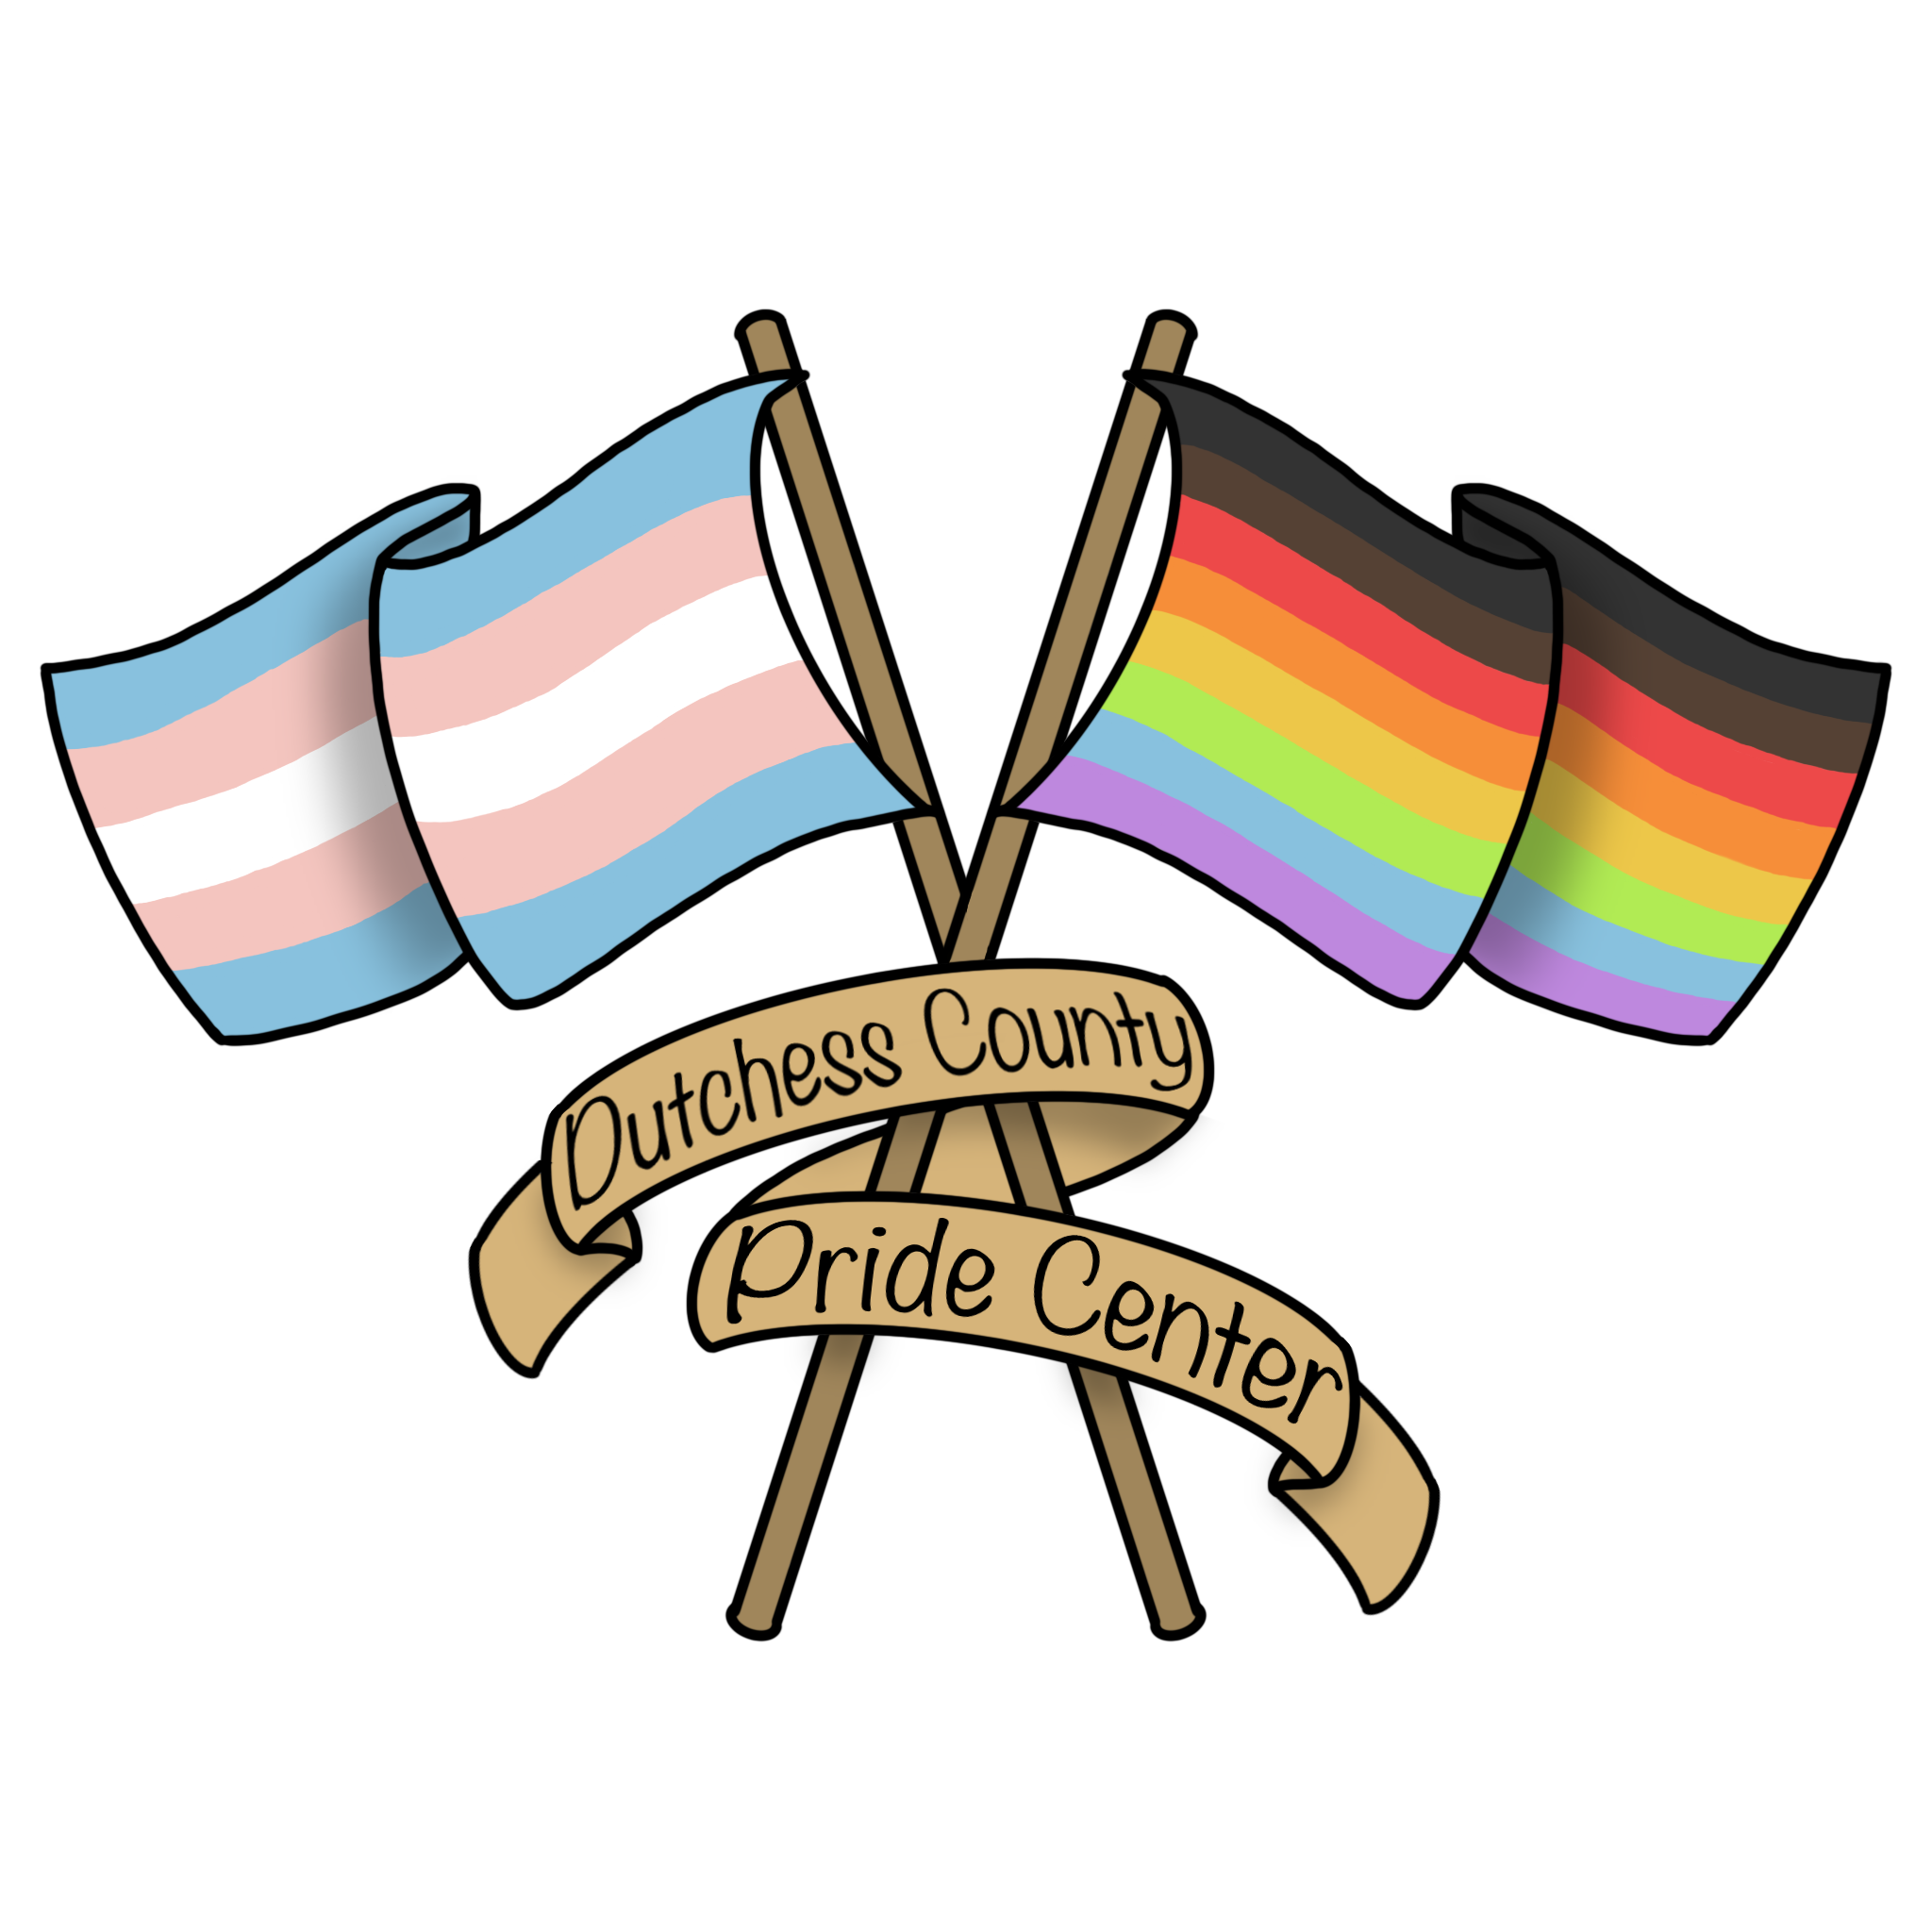 Dutchess County Pride Center